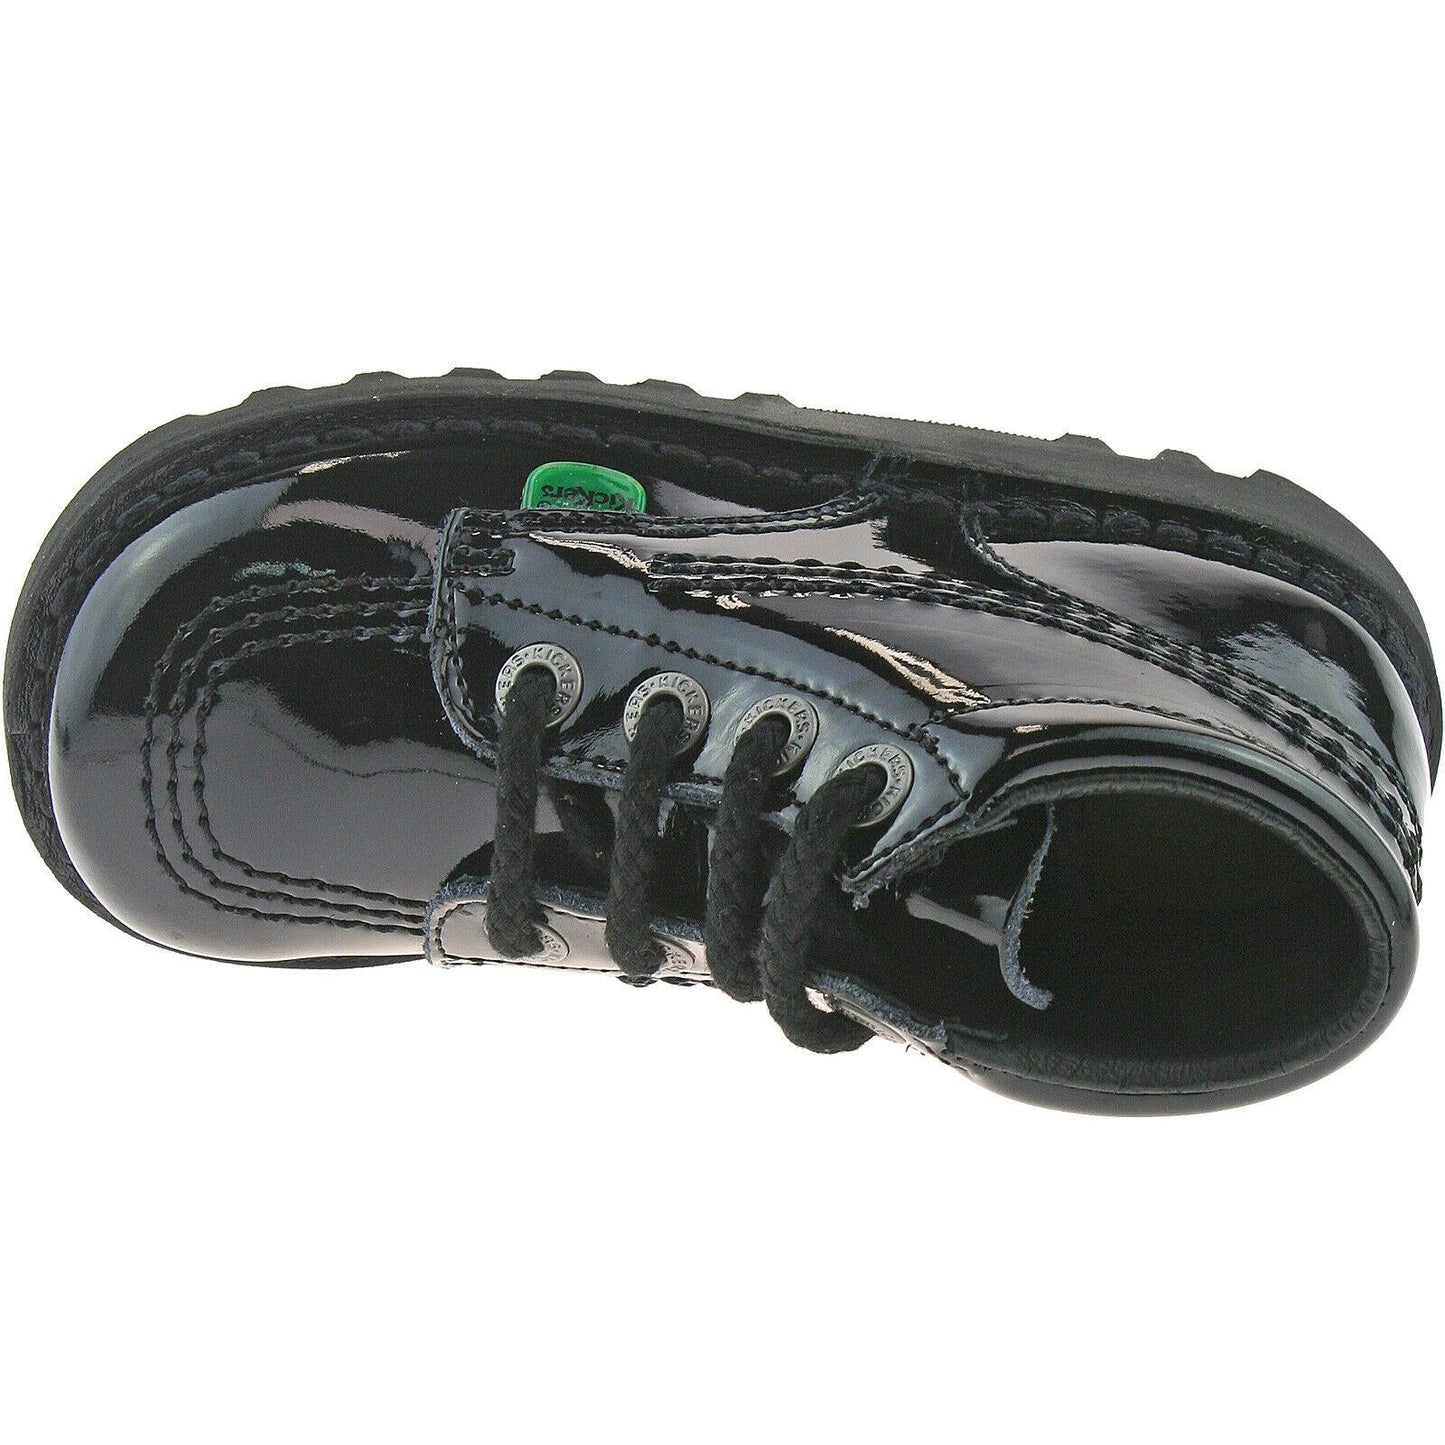 Girls Infants Kickers Kick Hi Black Patent Leather School Shoes KF0000408